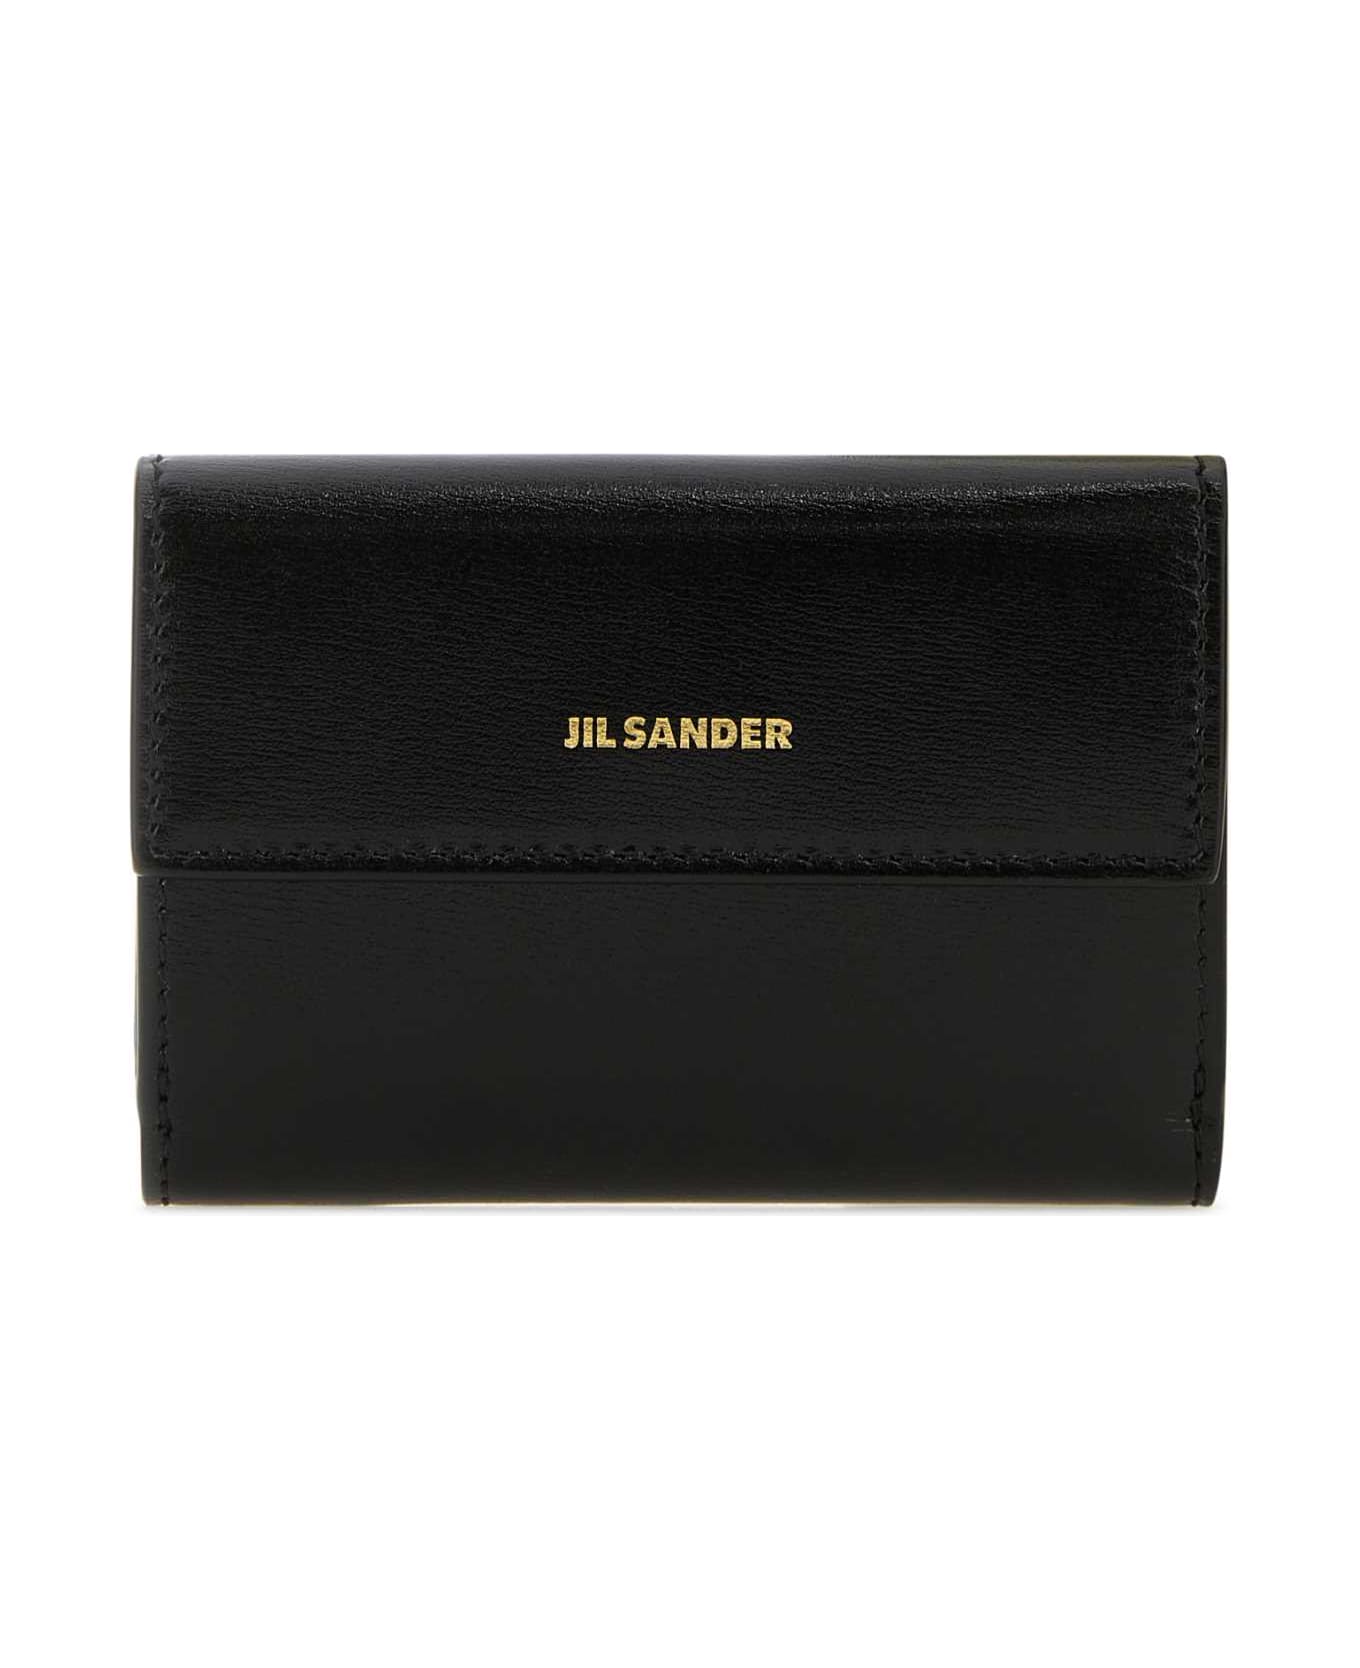 Jil Sander Black Leather Wallet - 001 財布